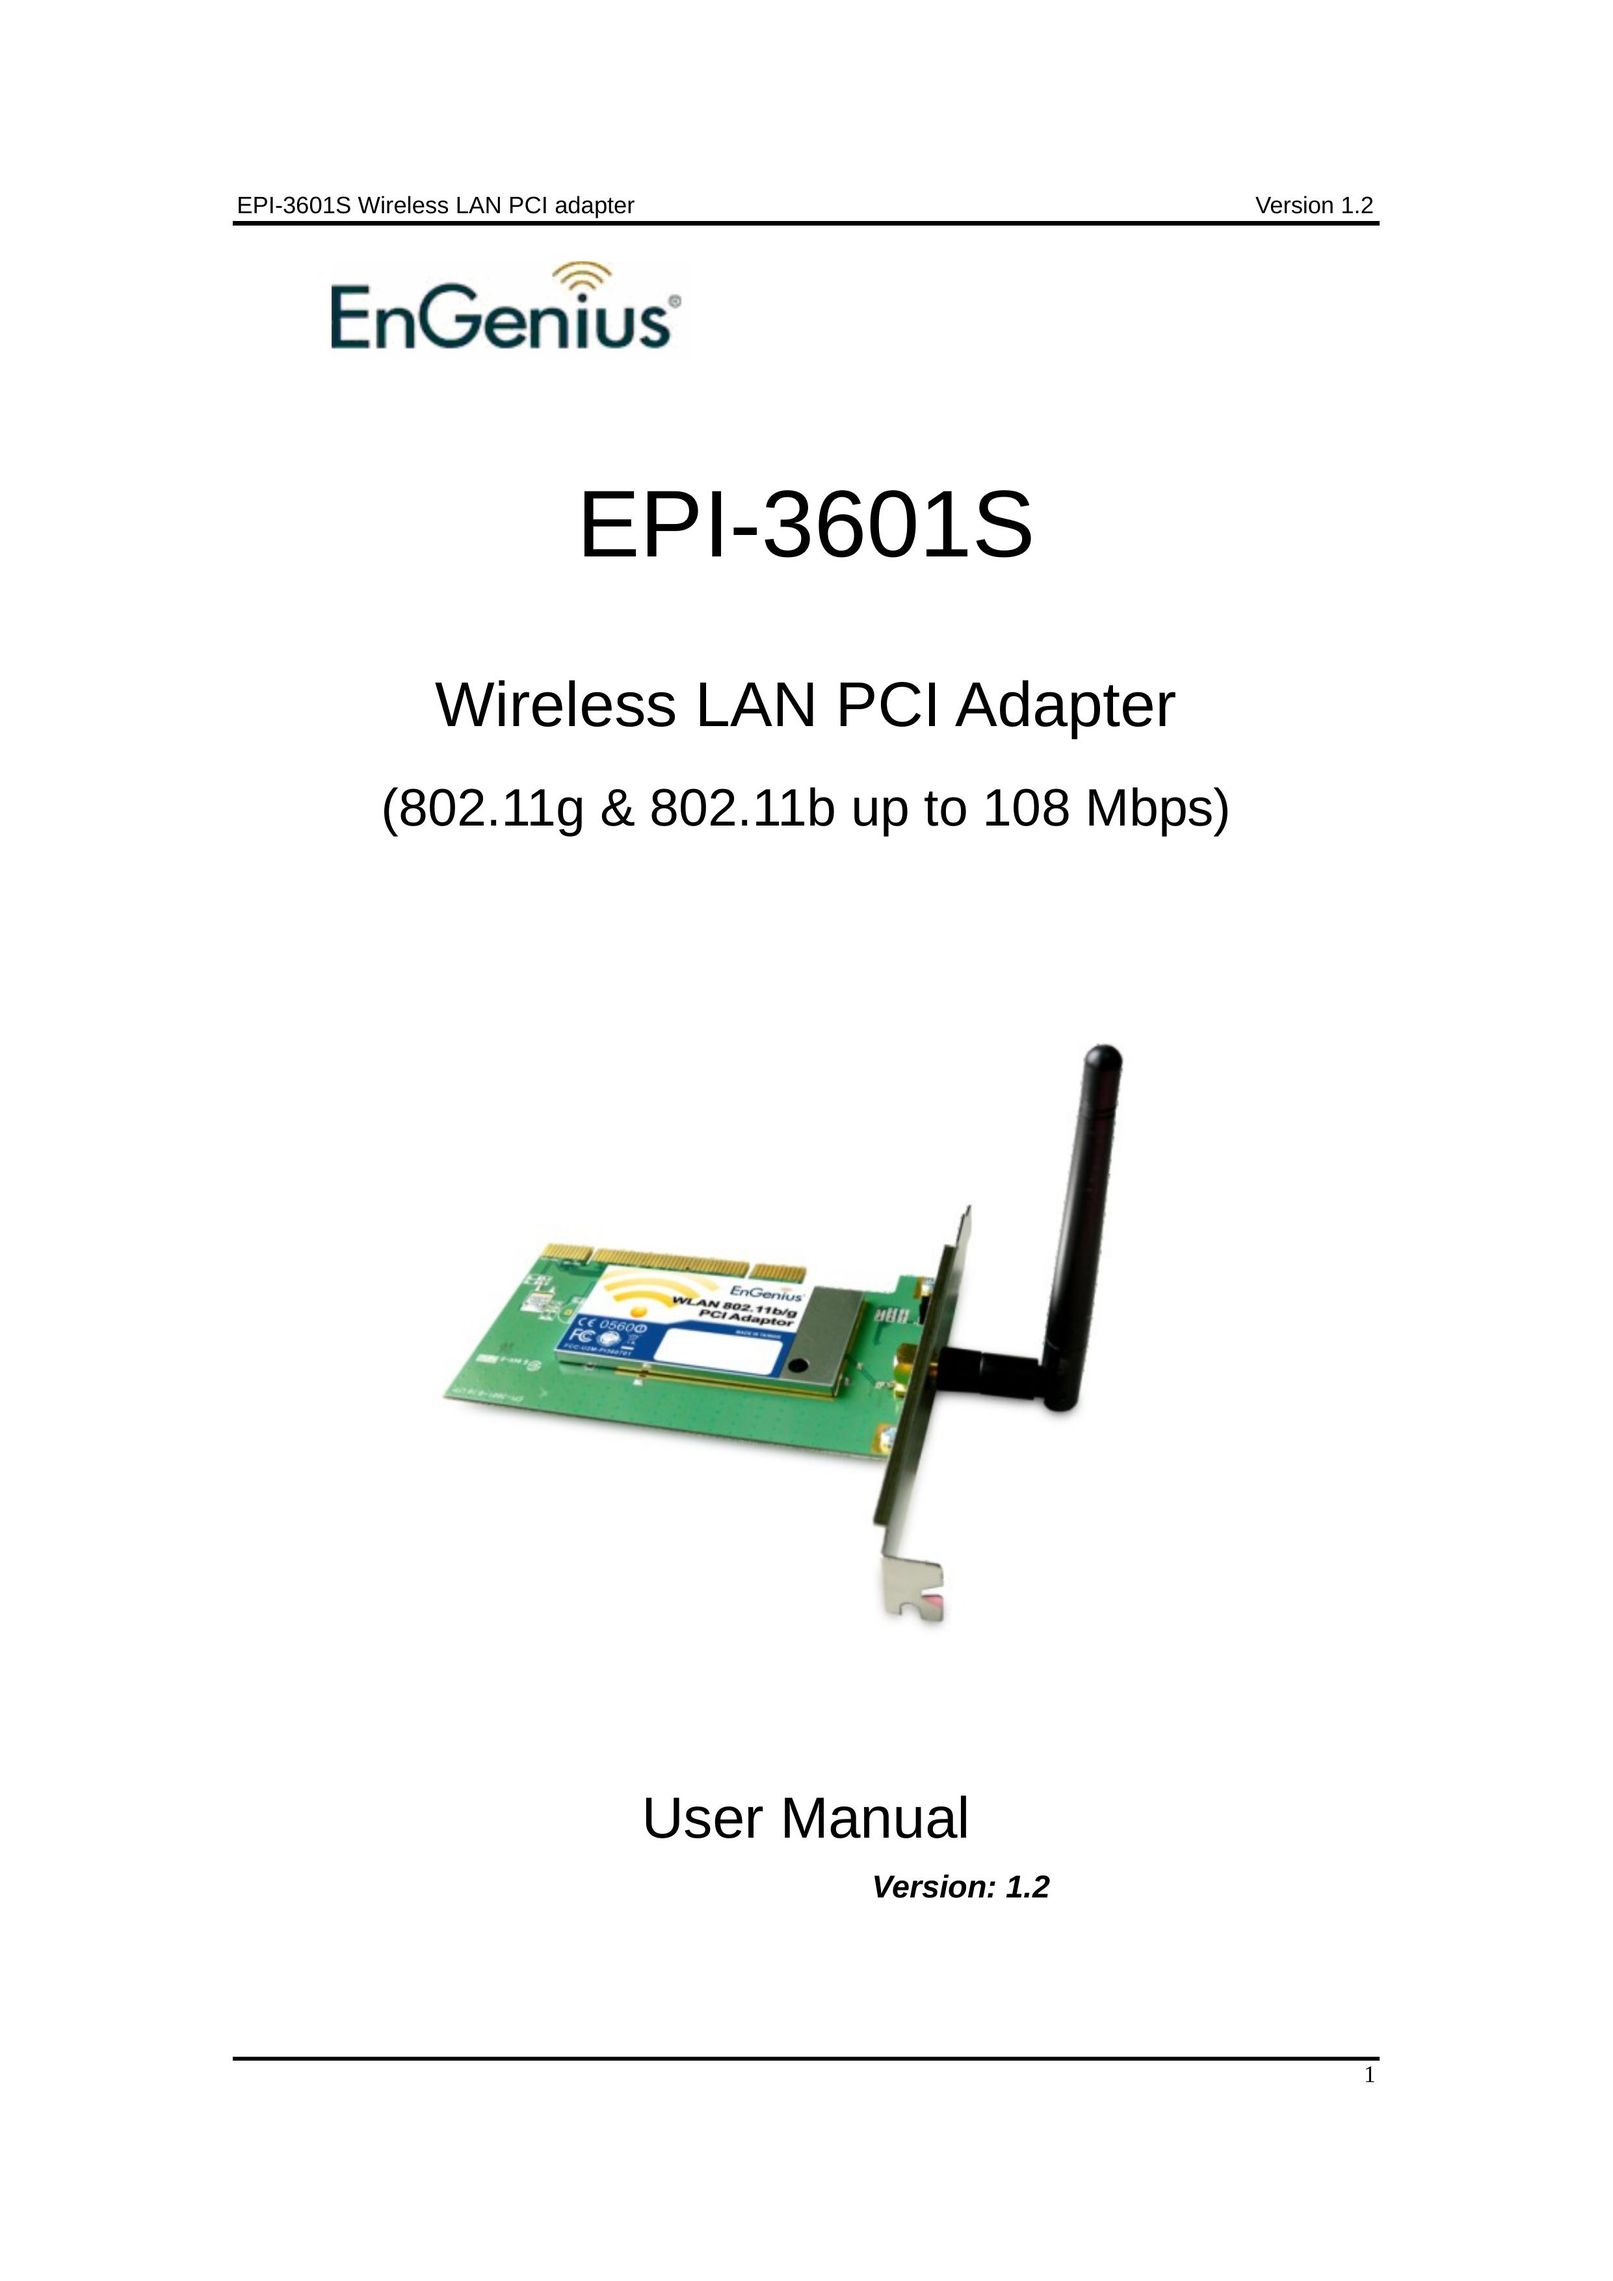 EnGenius Technologies EPI-3601S Network Card User Manual